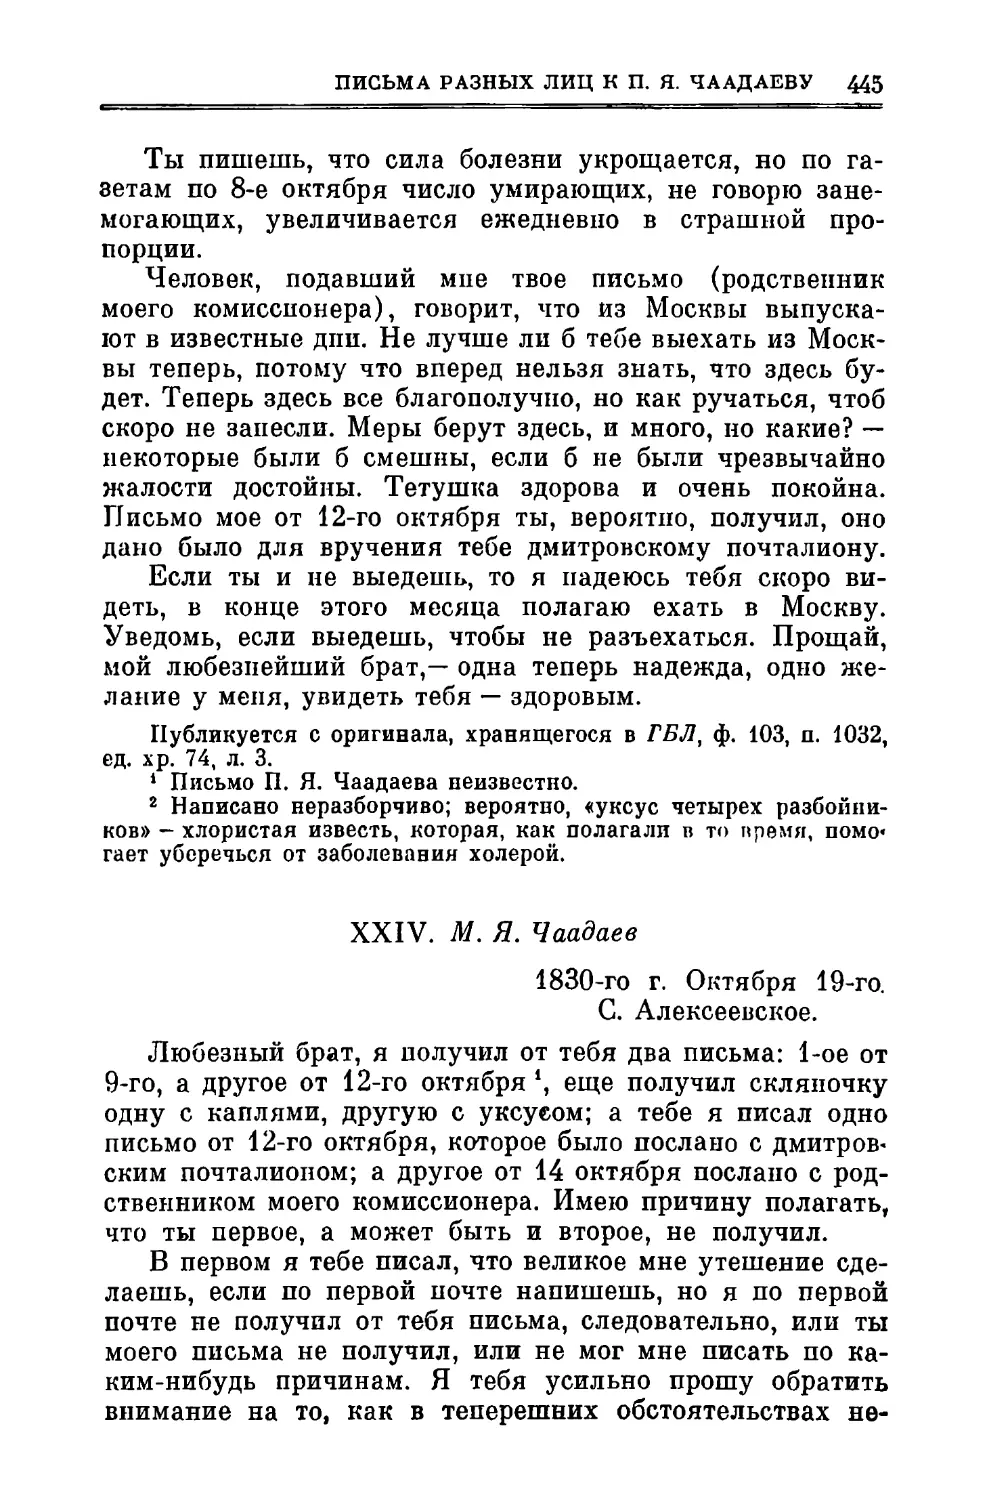 XXIV. Чаадаев М.Я. 19.Х.1830